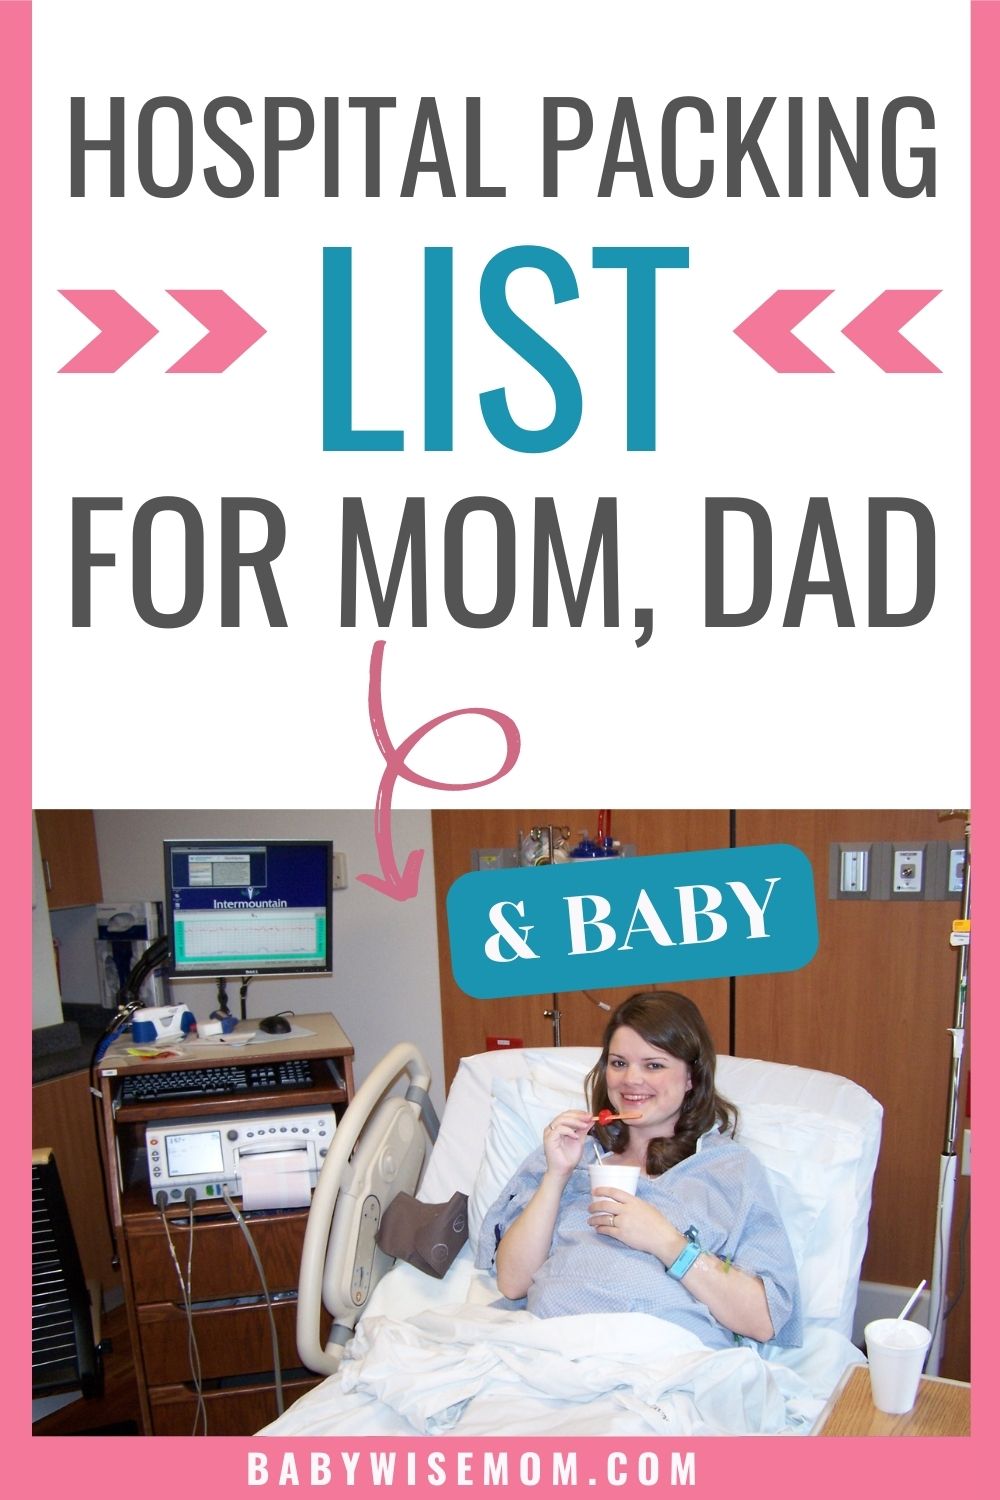 https://www.babywisemom.com/wp-content/uploads/2012/07/Hospital-packing-list-1.jpg